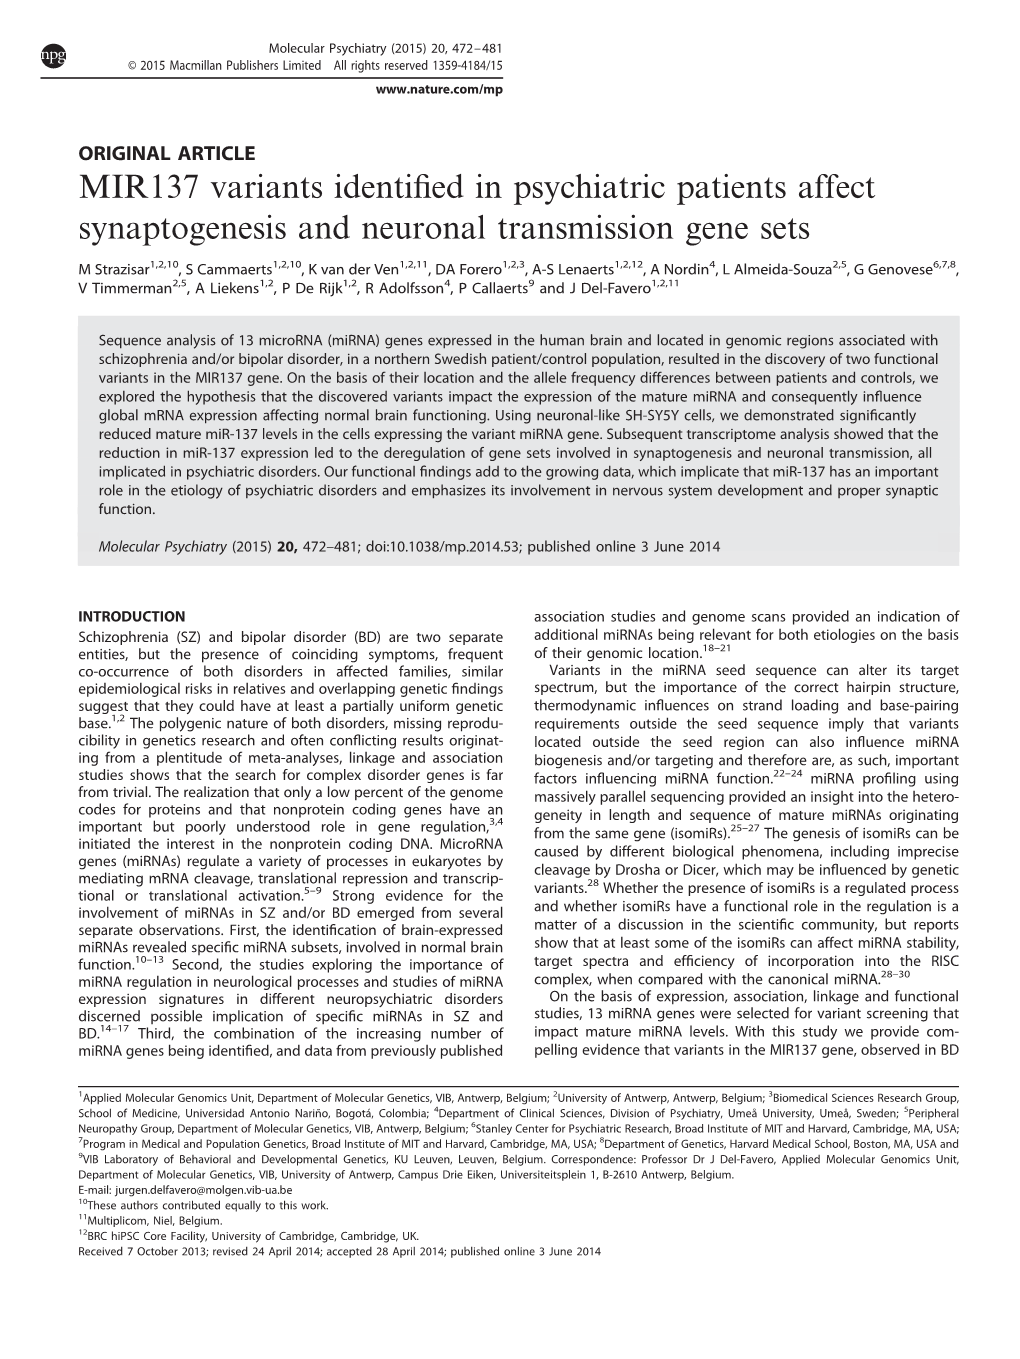 MIR137 Variants Identified in Psychiatric Patients Affect